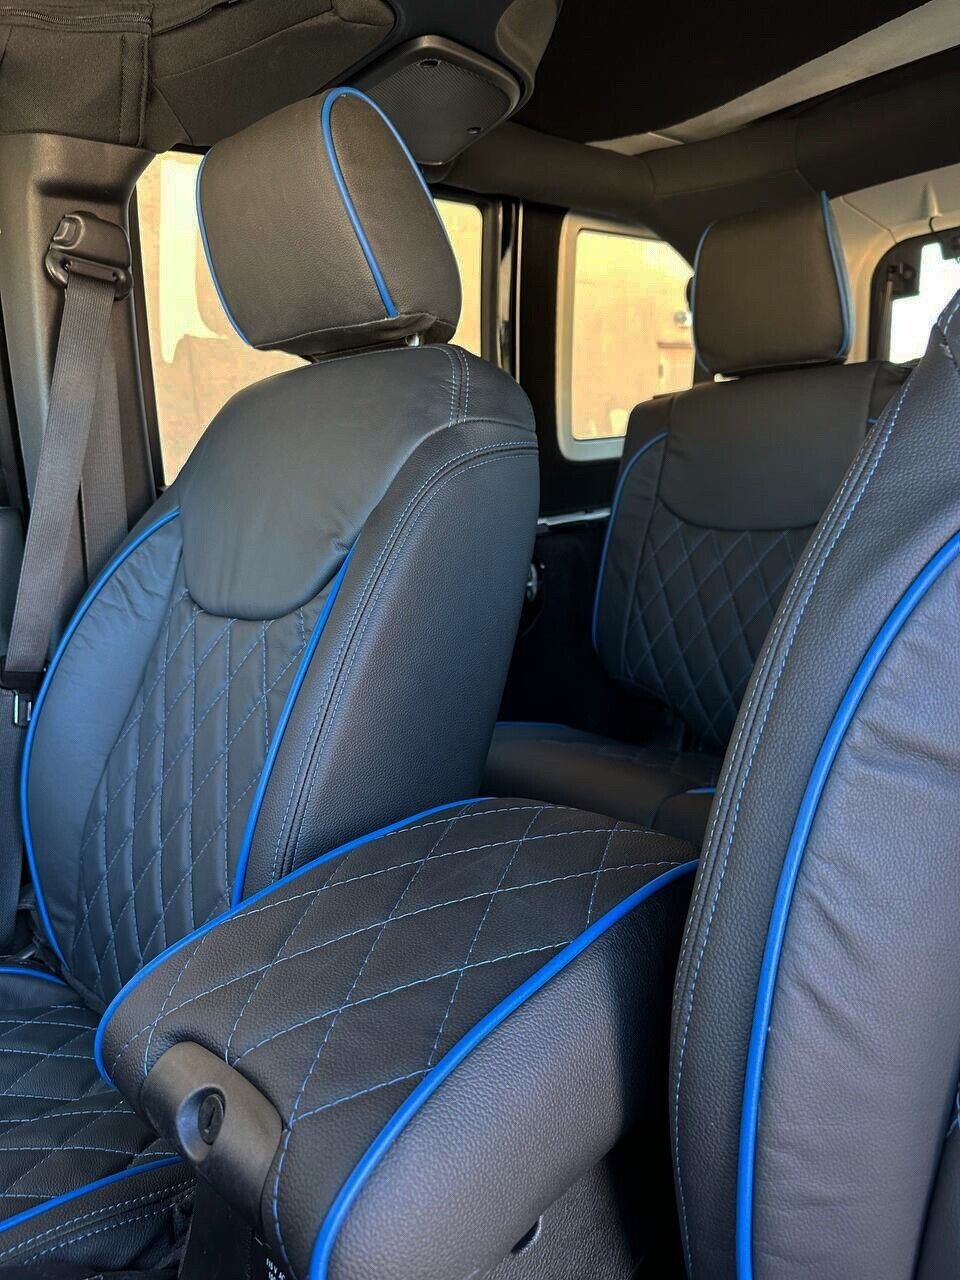 2016-2017 Fits JEEP WRANGLER JK CUSTOM LEATHER SEAT COVERS BLACK & Blu – US  leather car seats